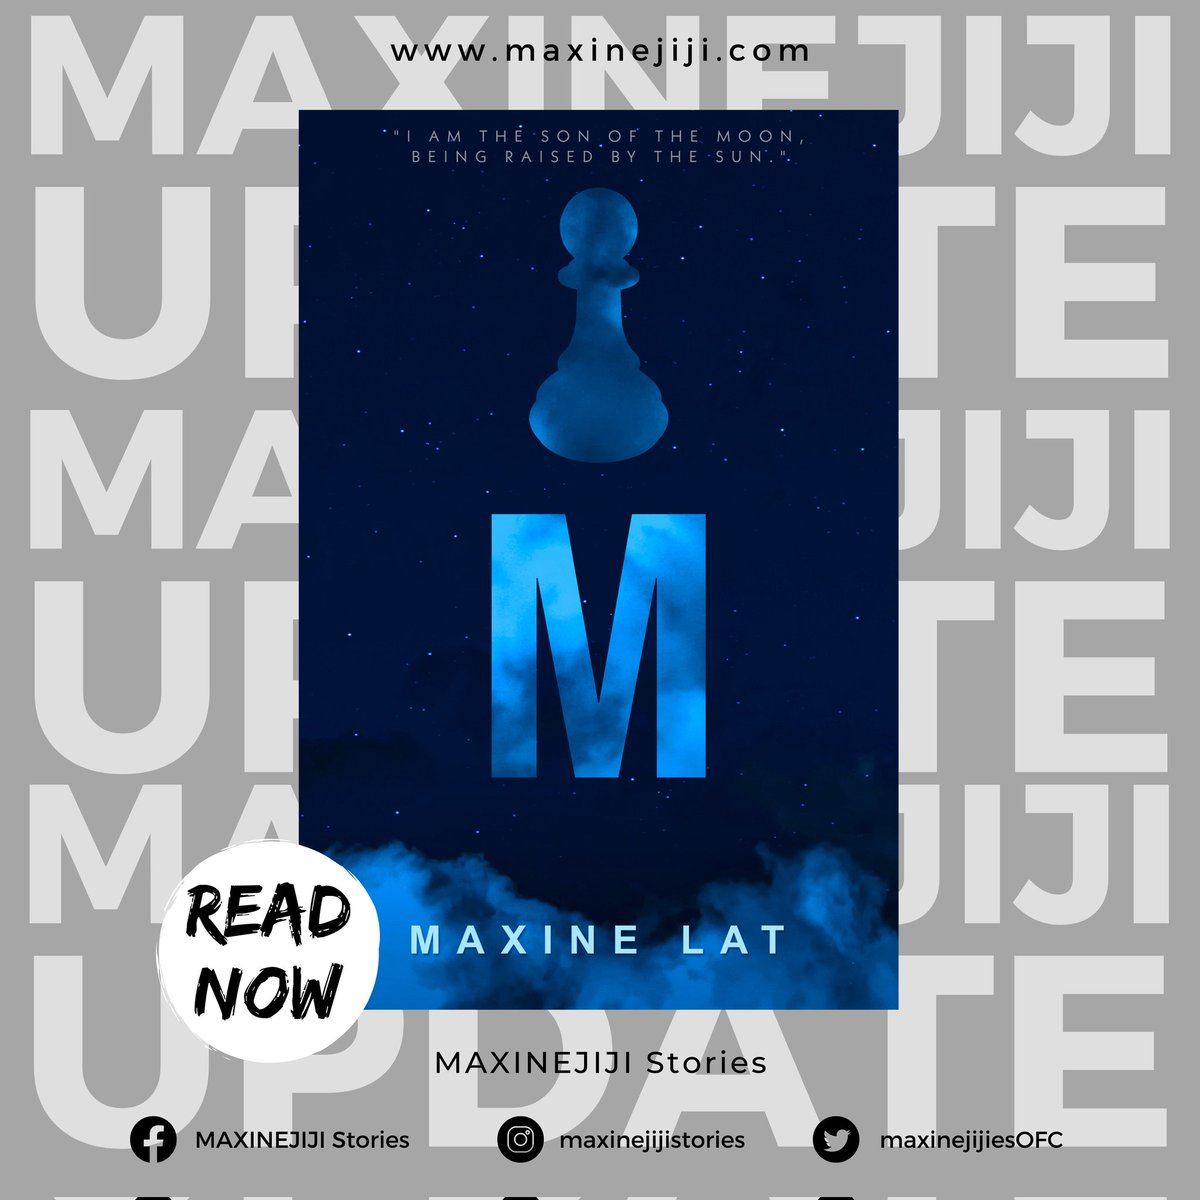 MAXSPAUN Chapter 15 is now updated. Enjoy reading! #MAXINEJIJIStories | @maxinejiji #MAXSPAUN | #ProjectM